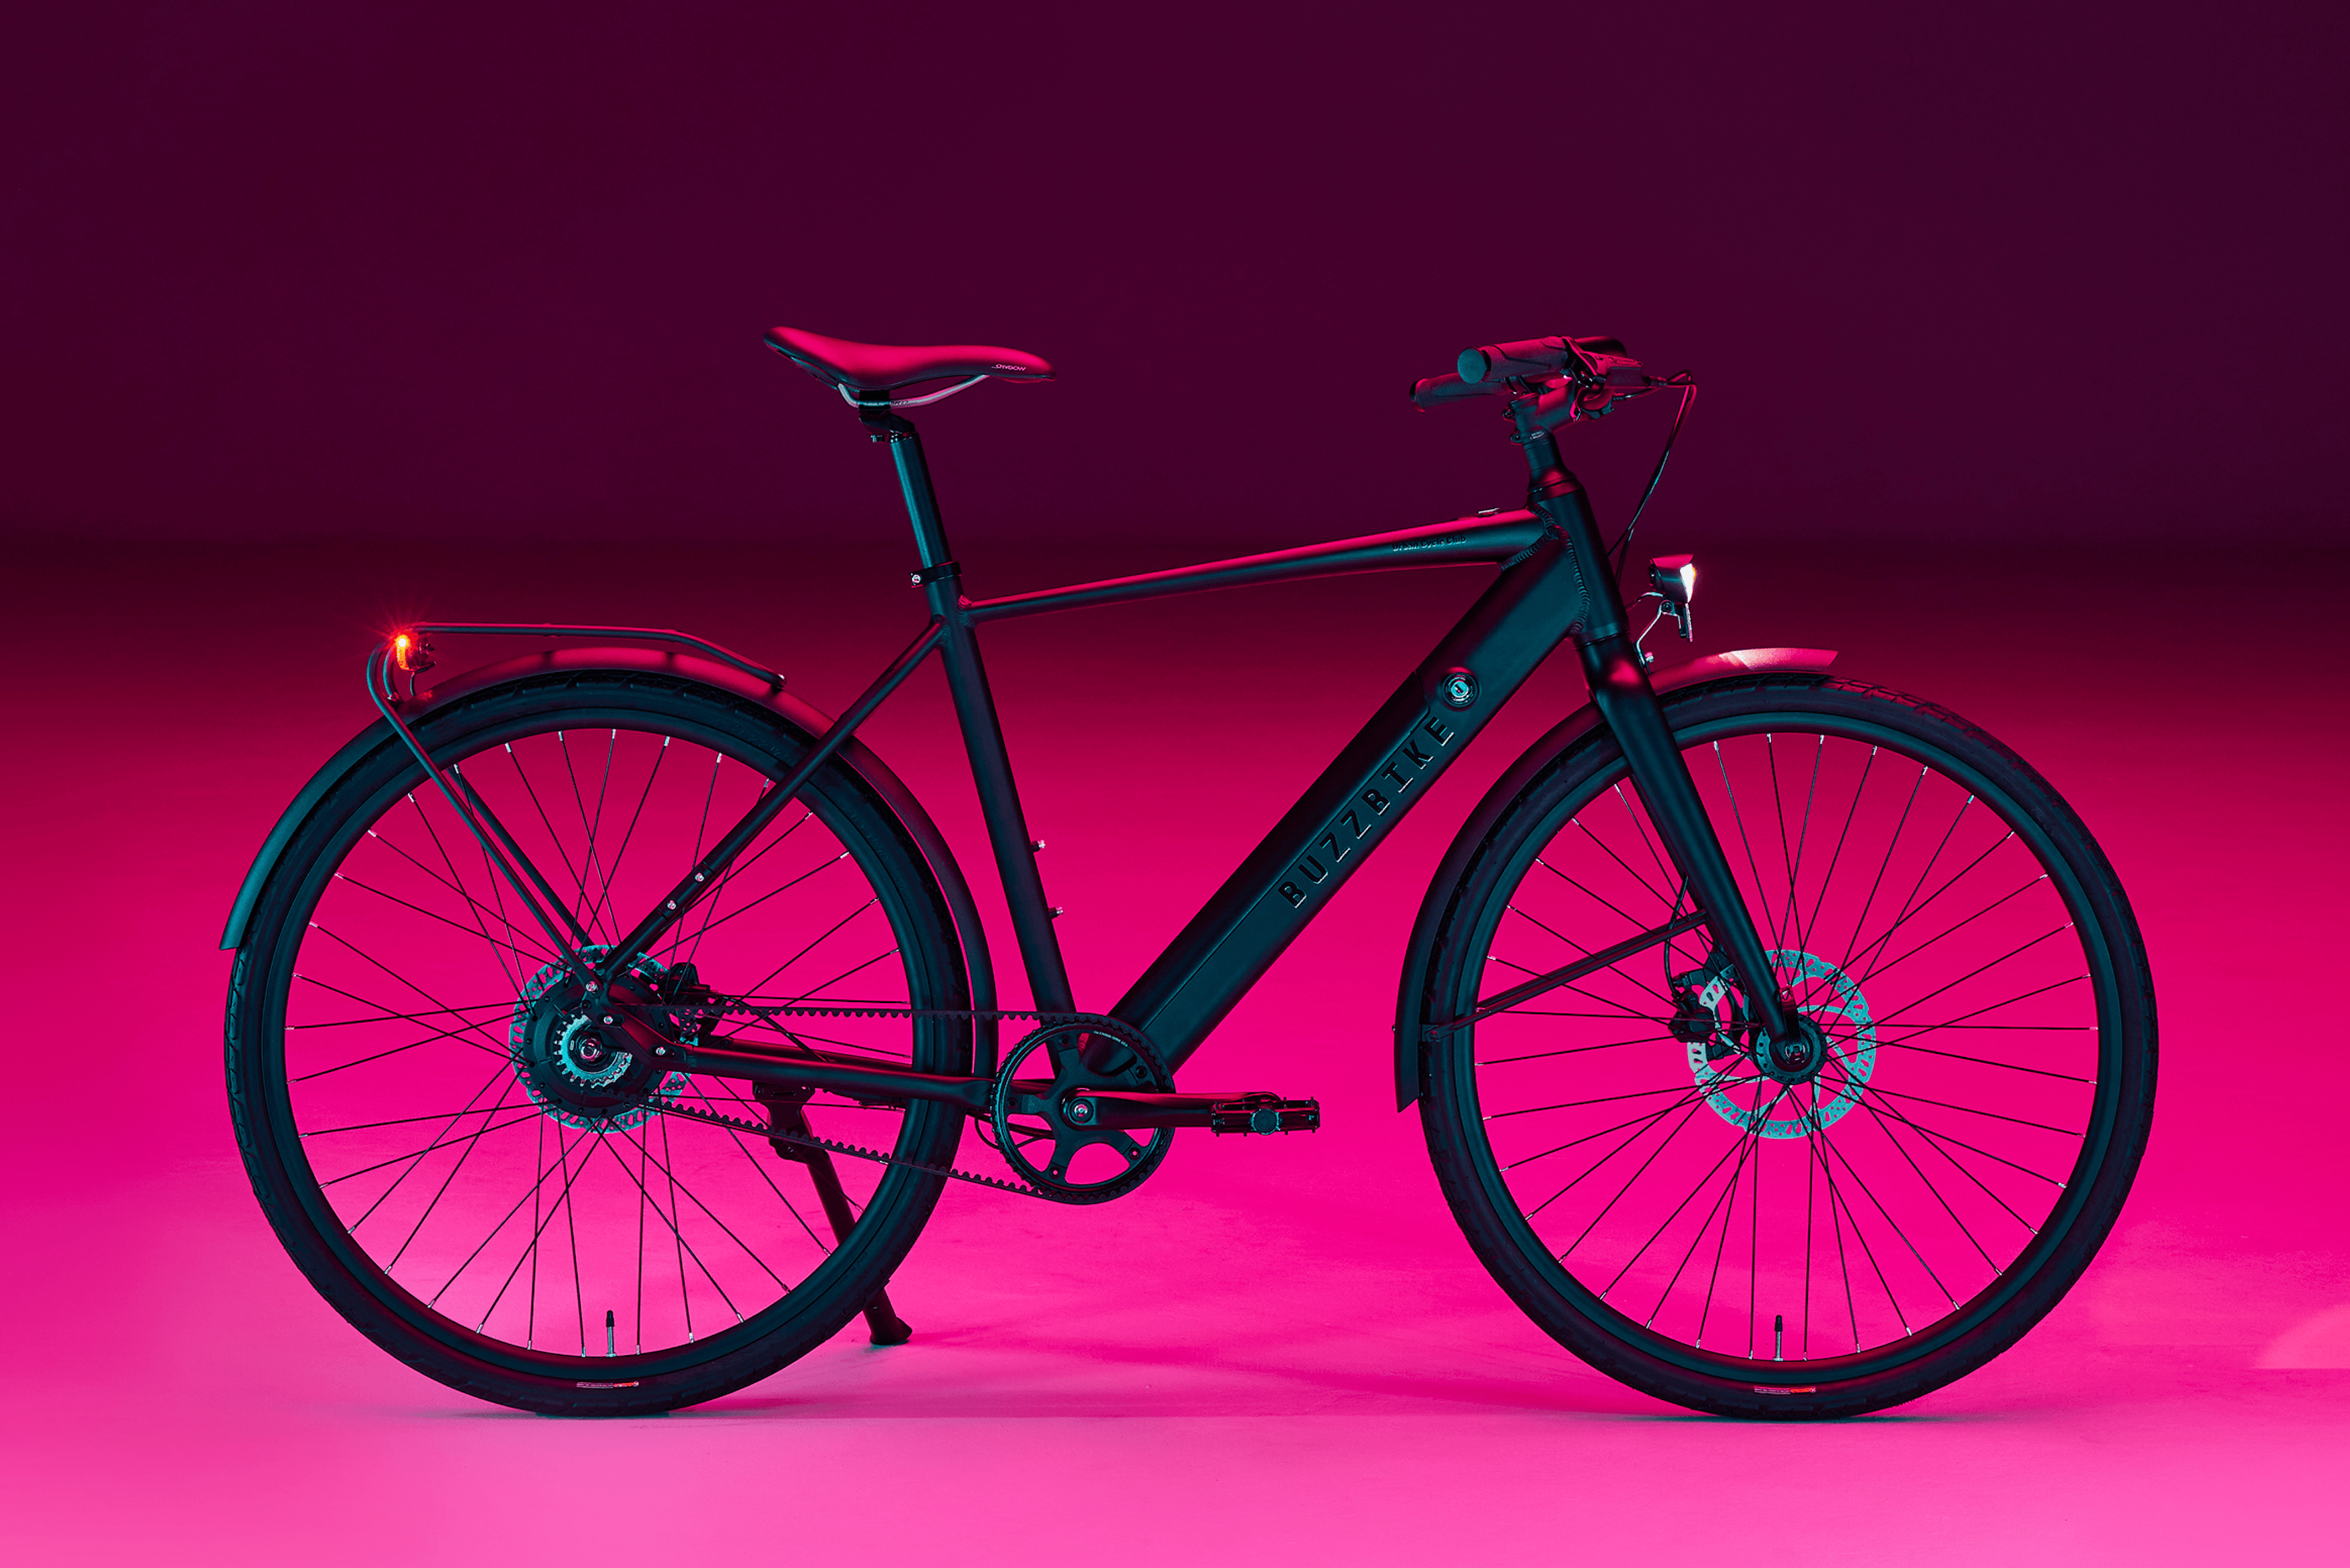 The ultimate urban e-bike